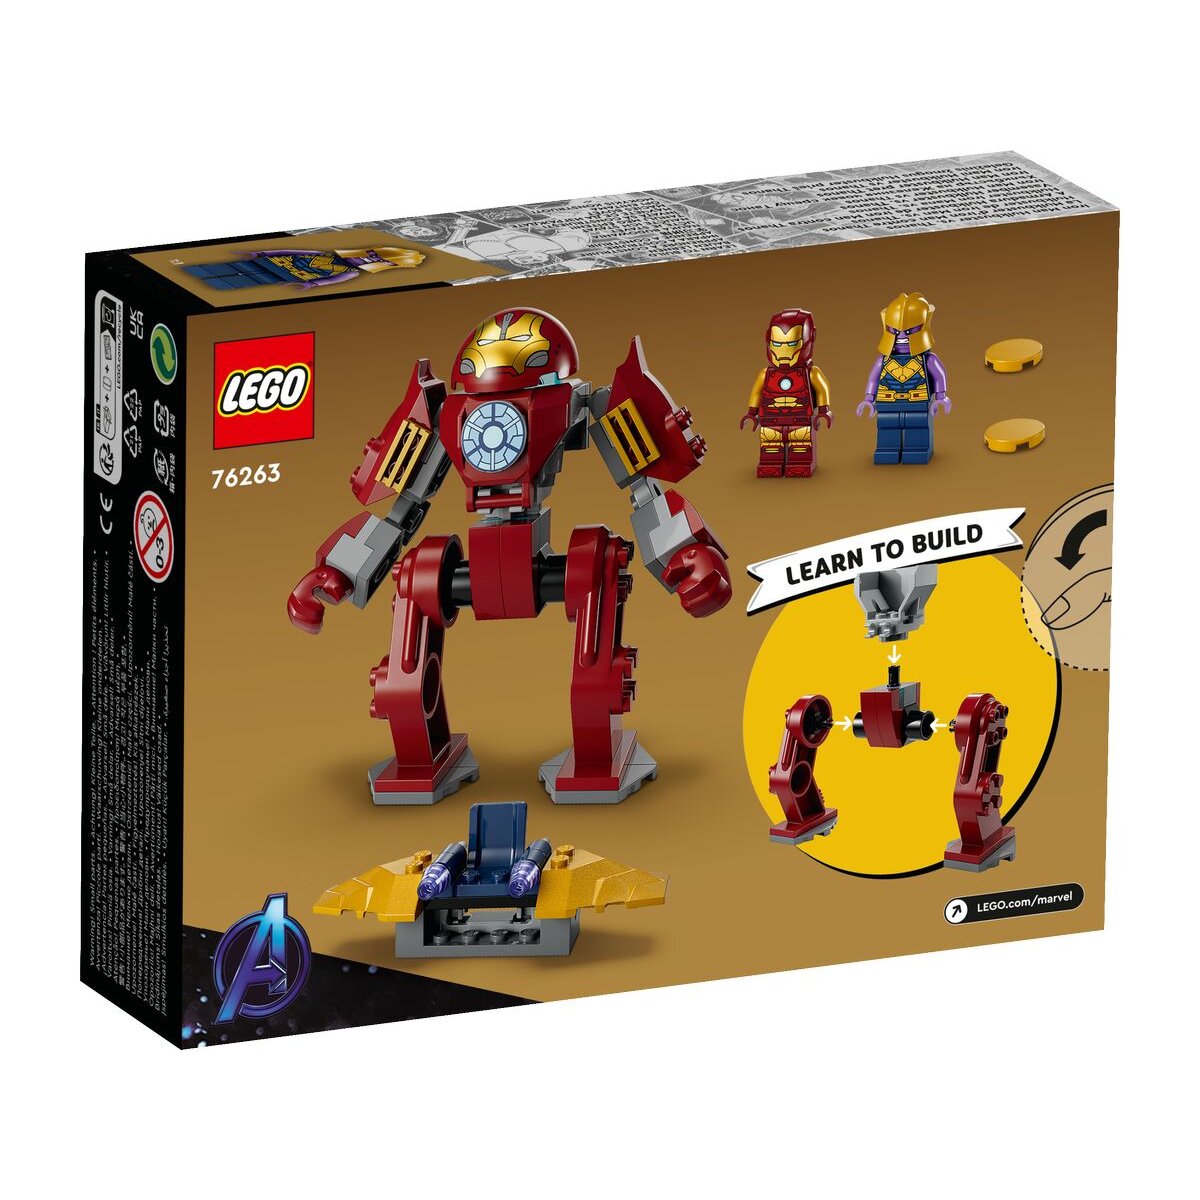 LEGO® Super Heroes Marvel 76263 Iron Man Hulkbuster vs. Thanos